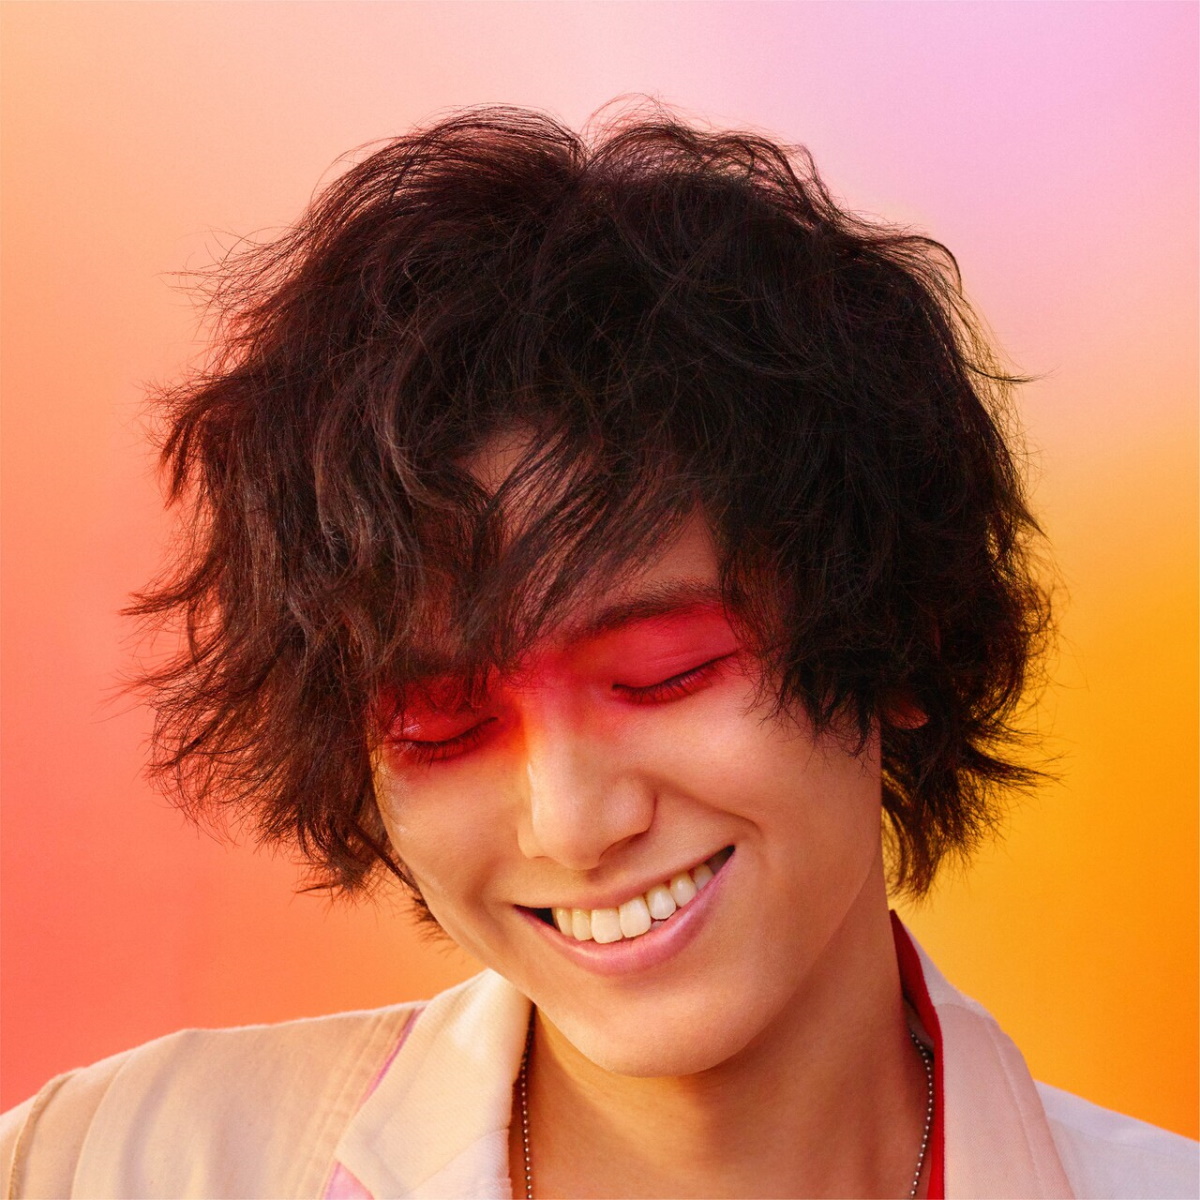 Cover image of『Fujii KazeMatsuri』from the Album『』